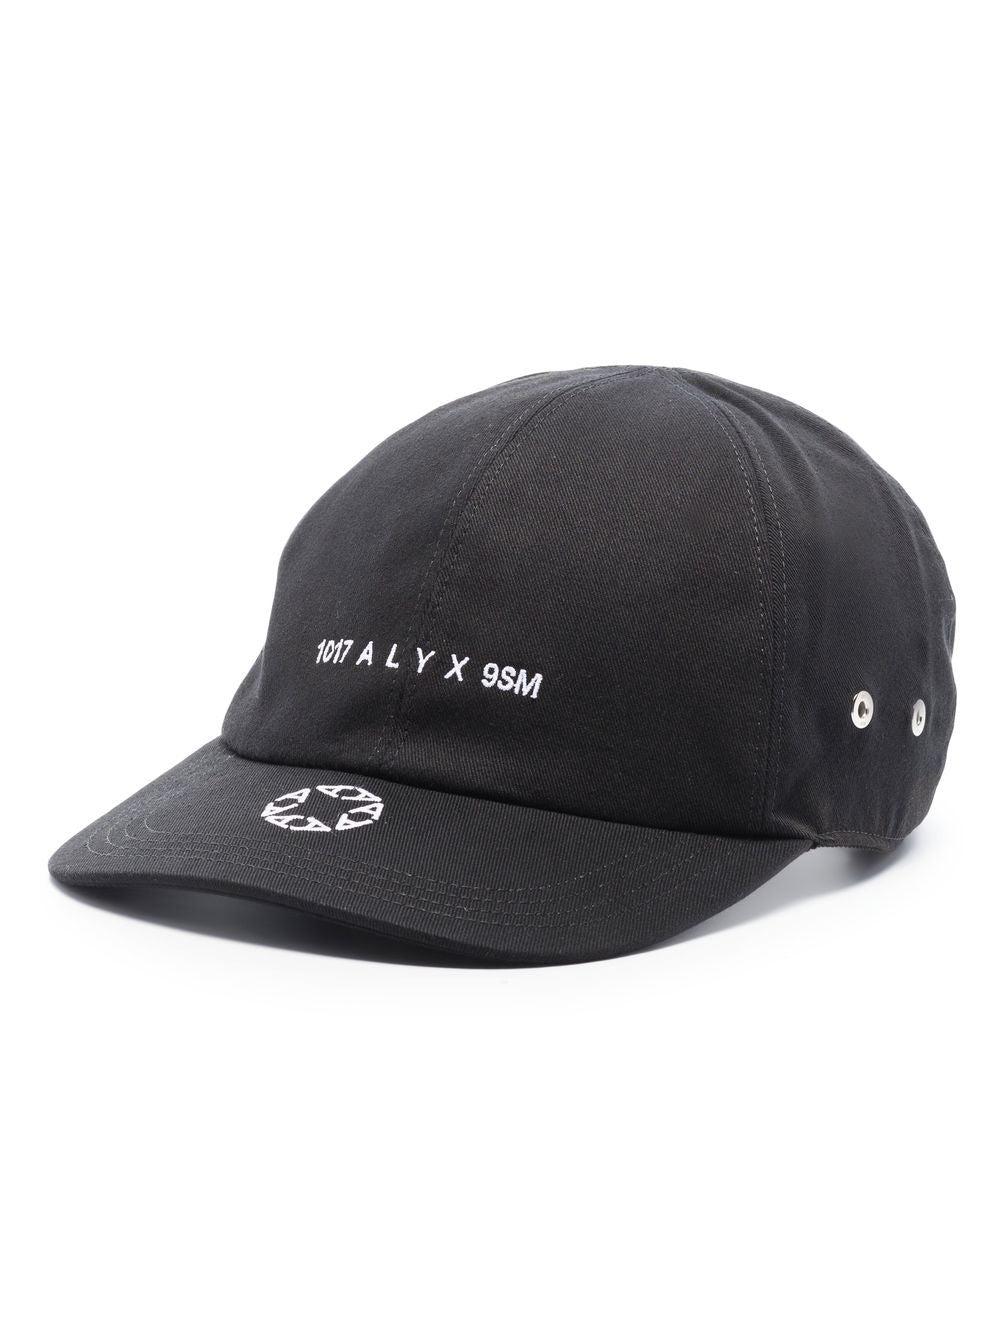 Alyx Men's Embroidered Logo Baseball Cap (Black) by ALYX